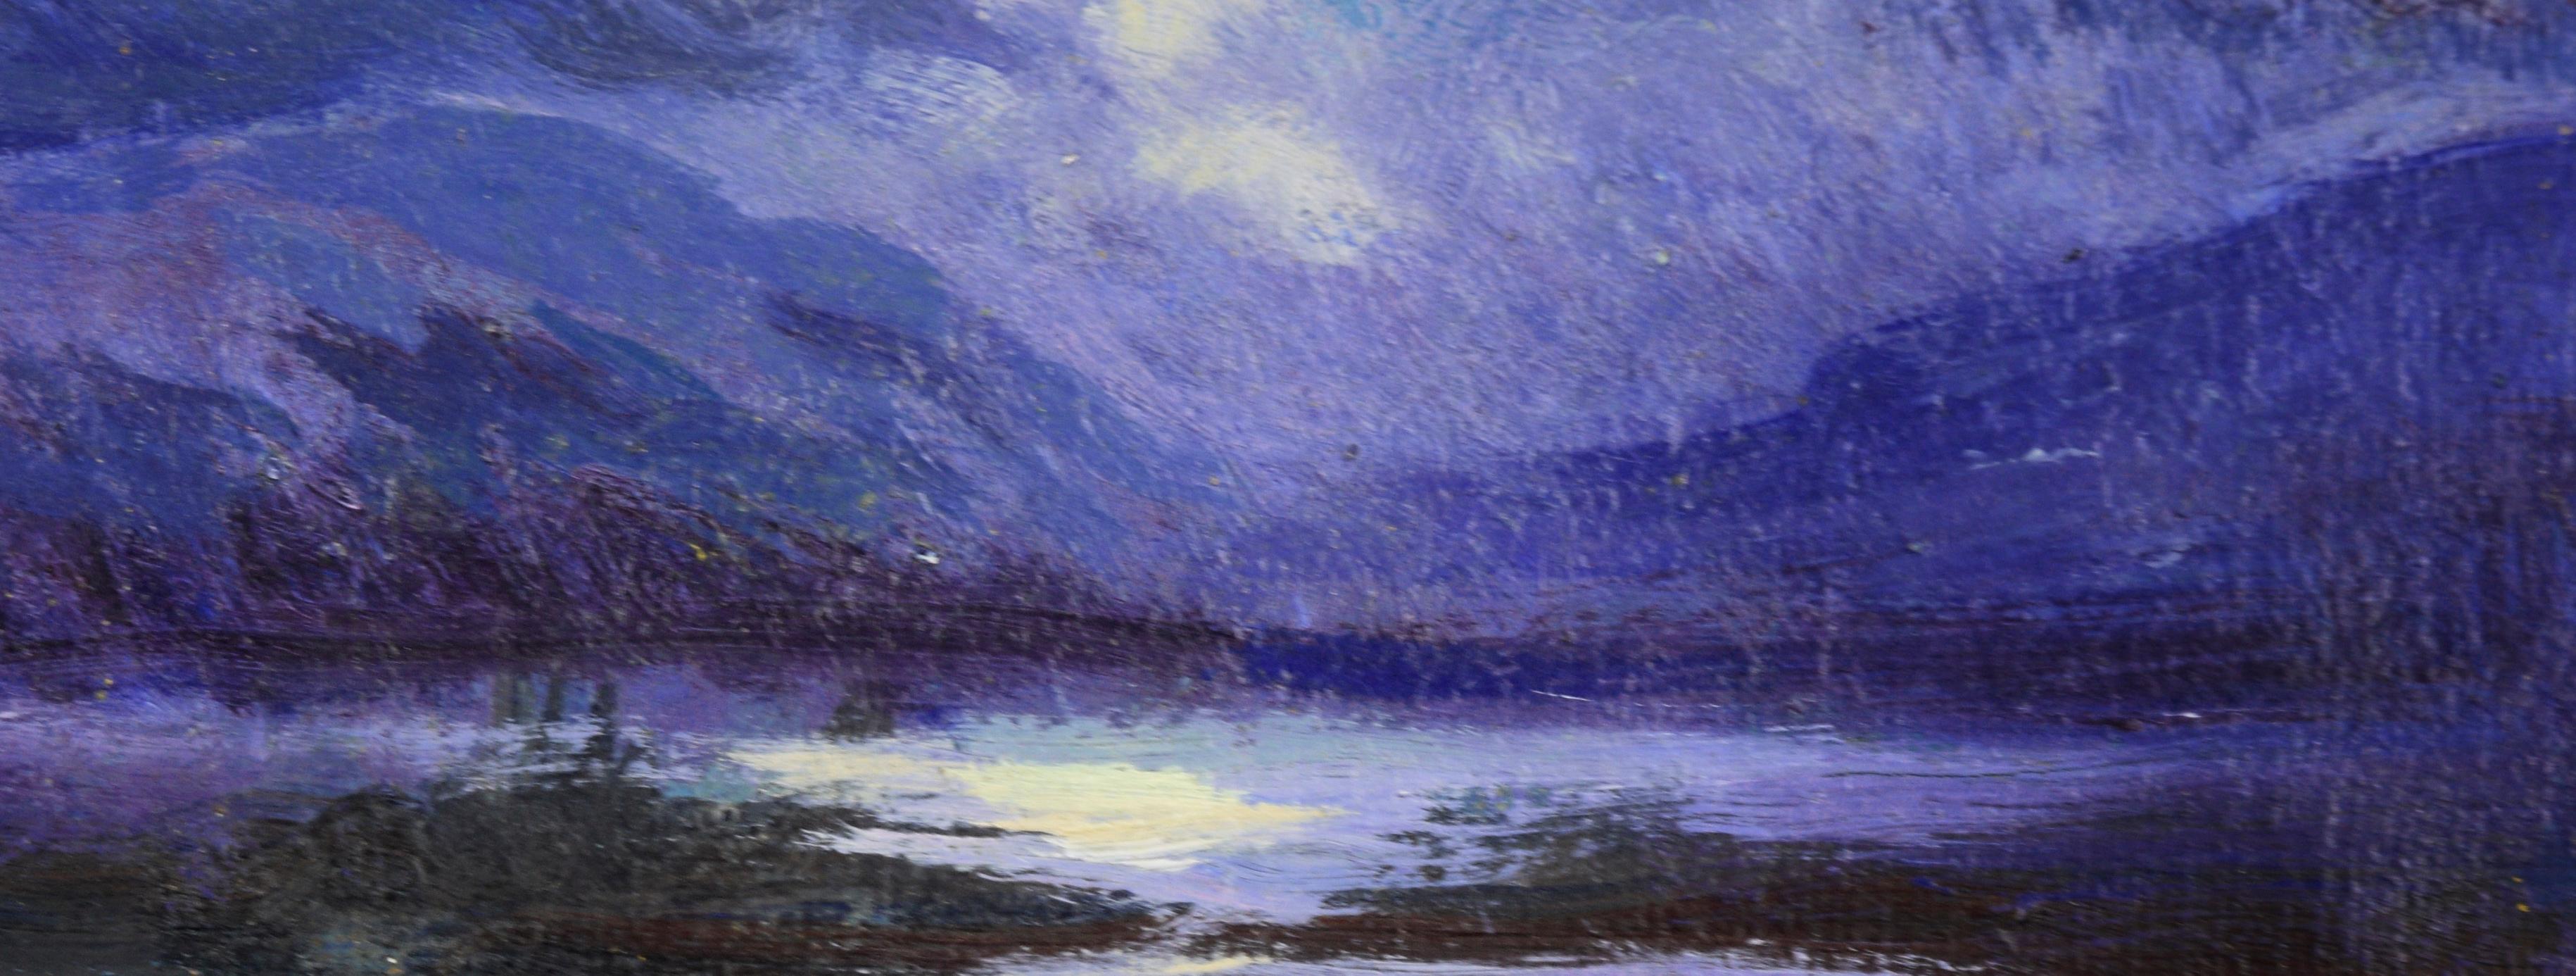 Miniature Midnight Seascape Carmel River - Purple Landscape Painting by Unknown